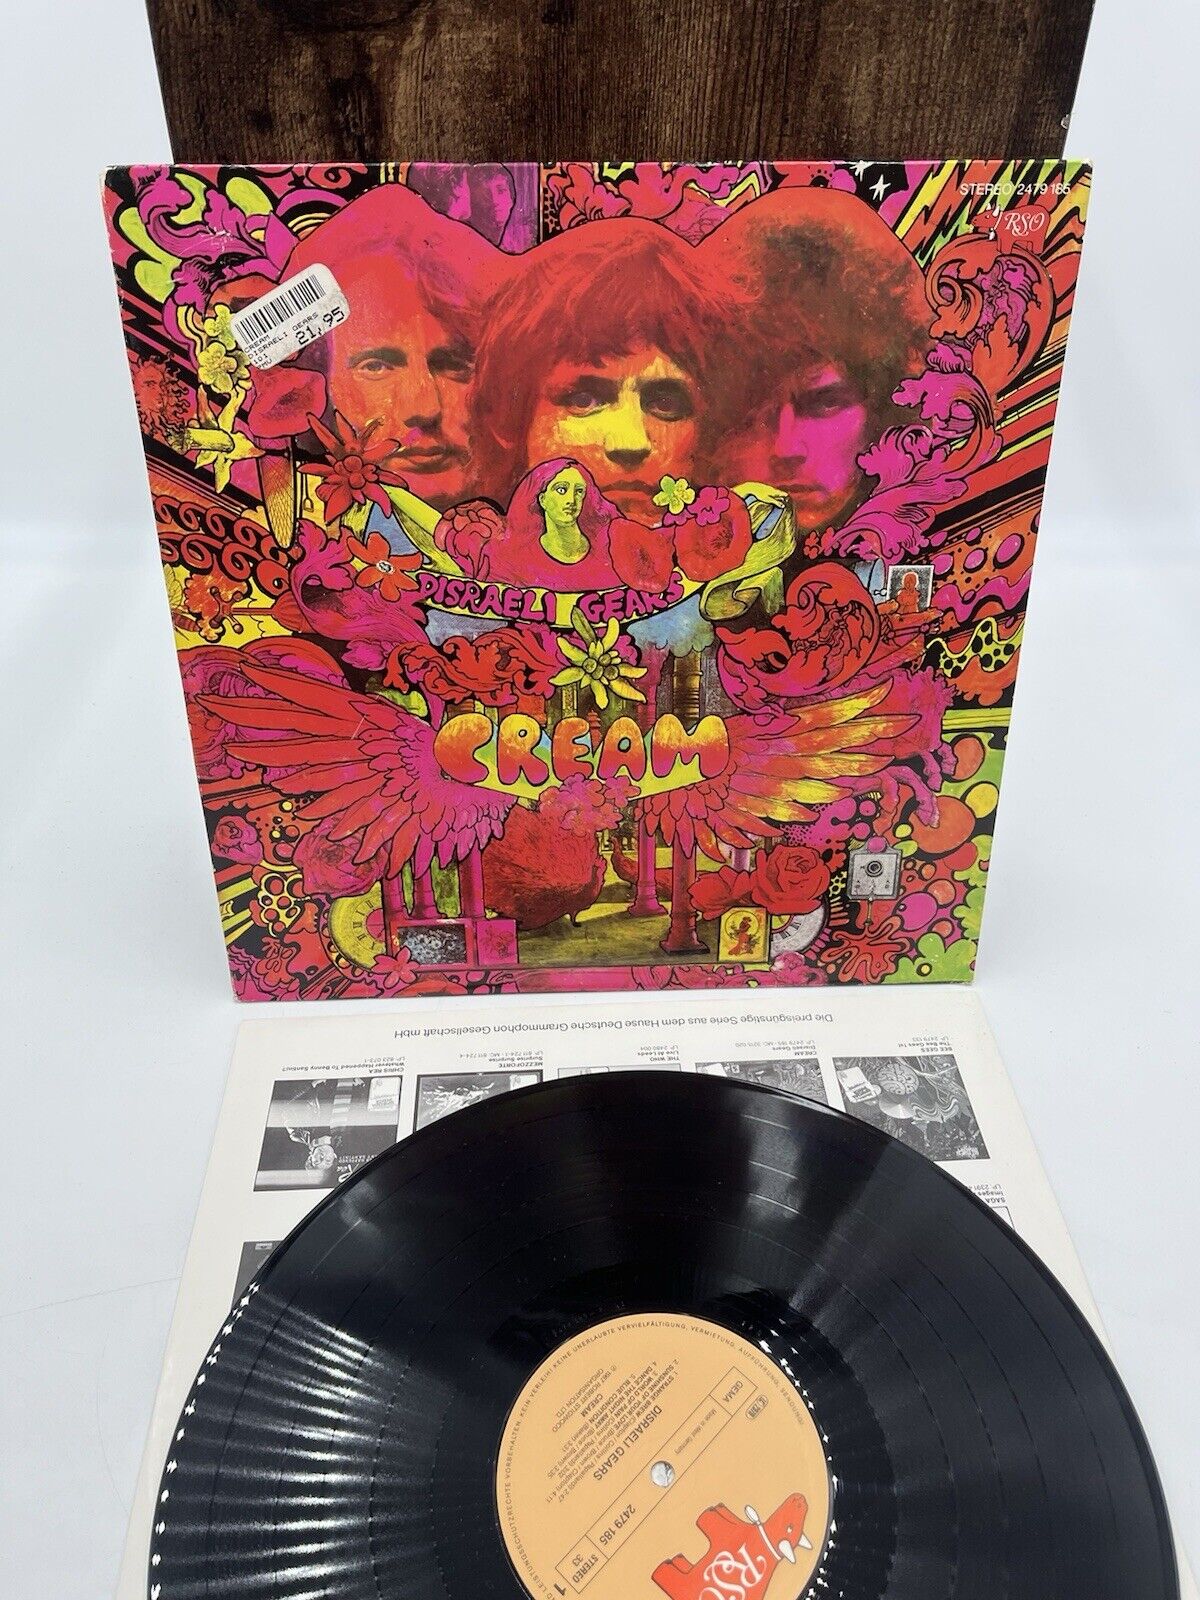 Cream / Disraeli Gears - Classic Rock Vinyl - 1967 - Heavy Blues/Psych